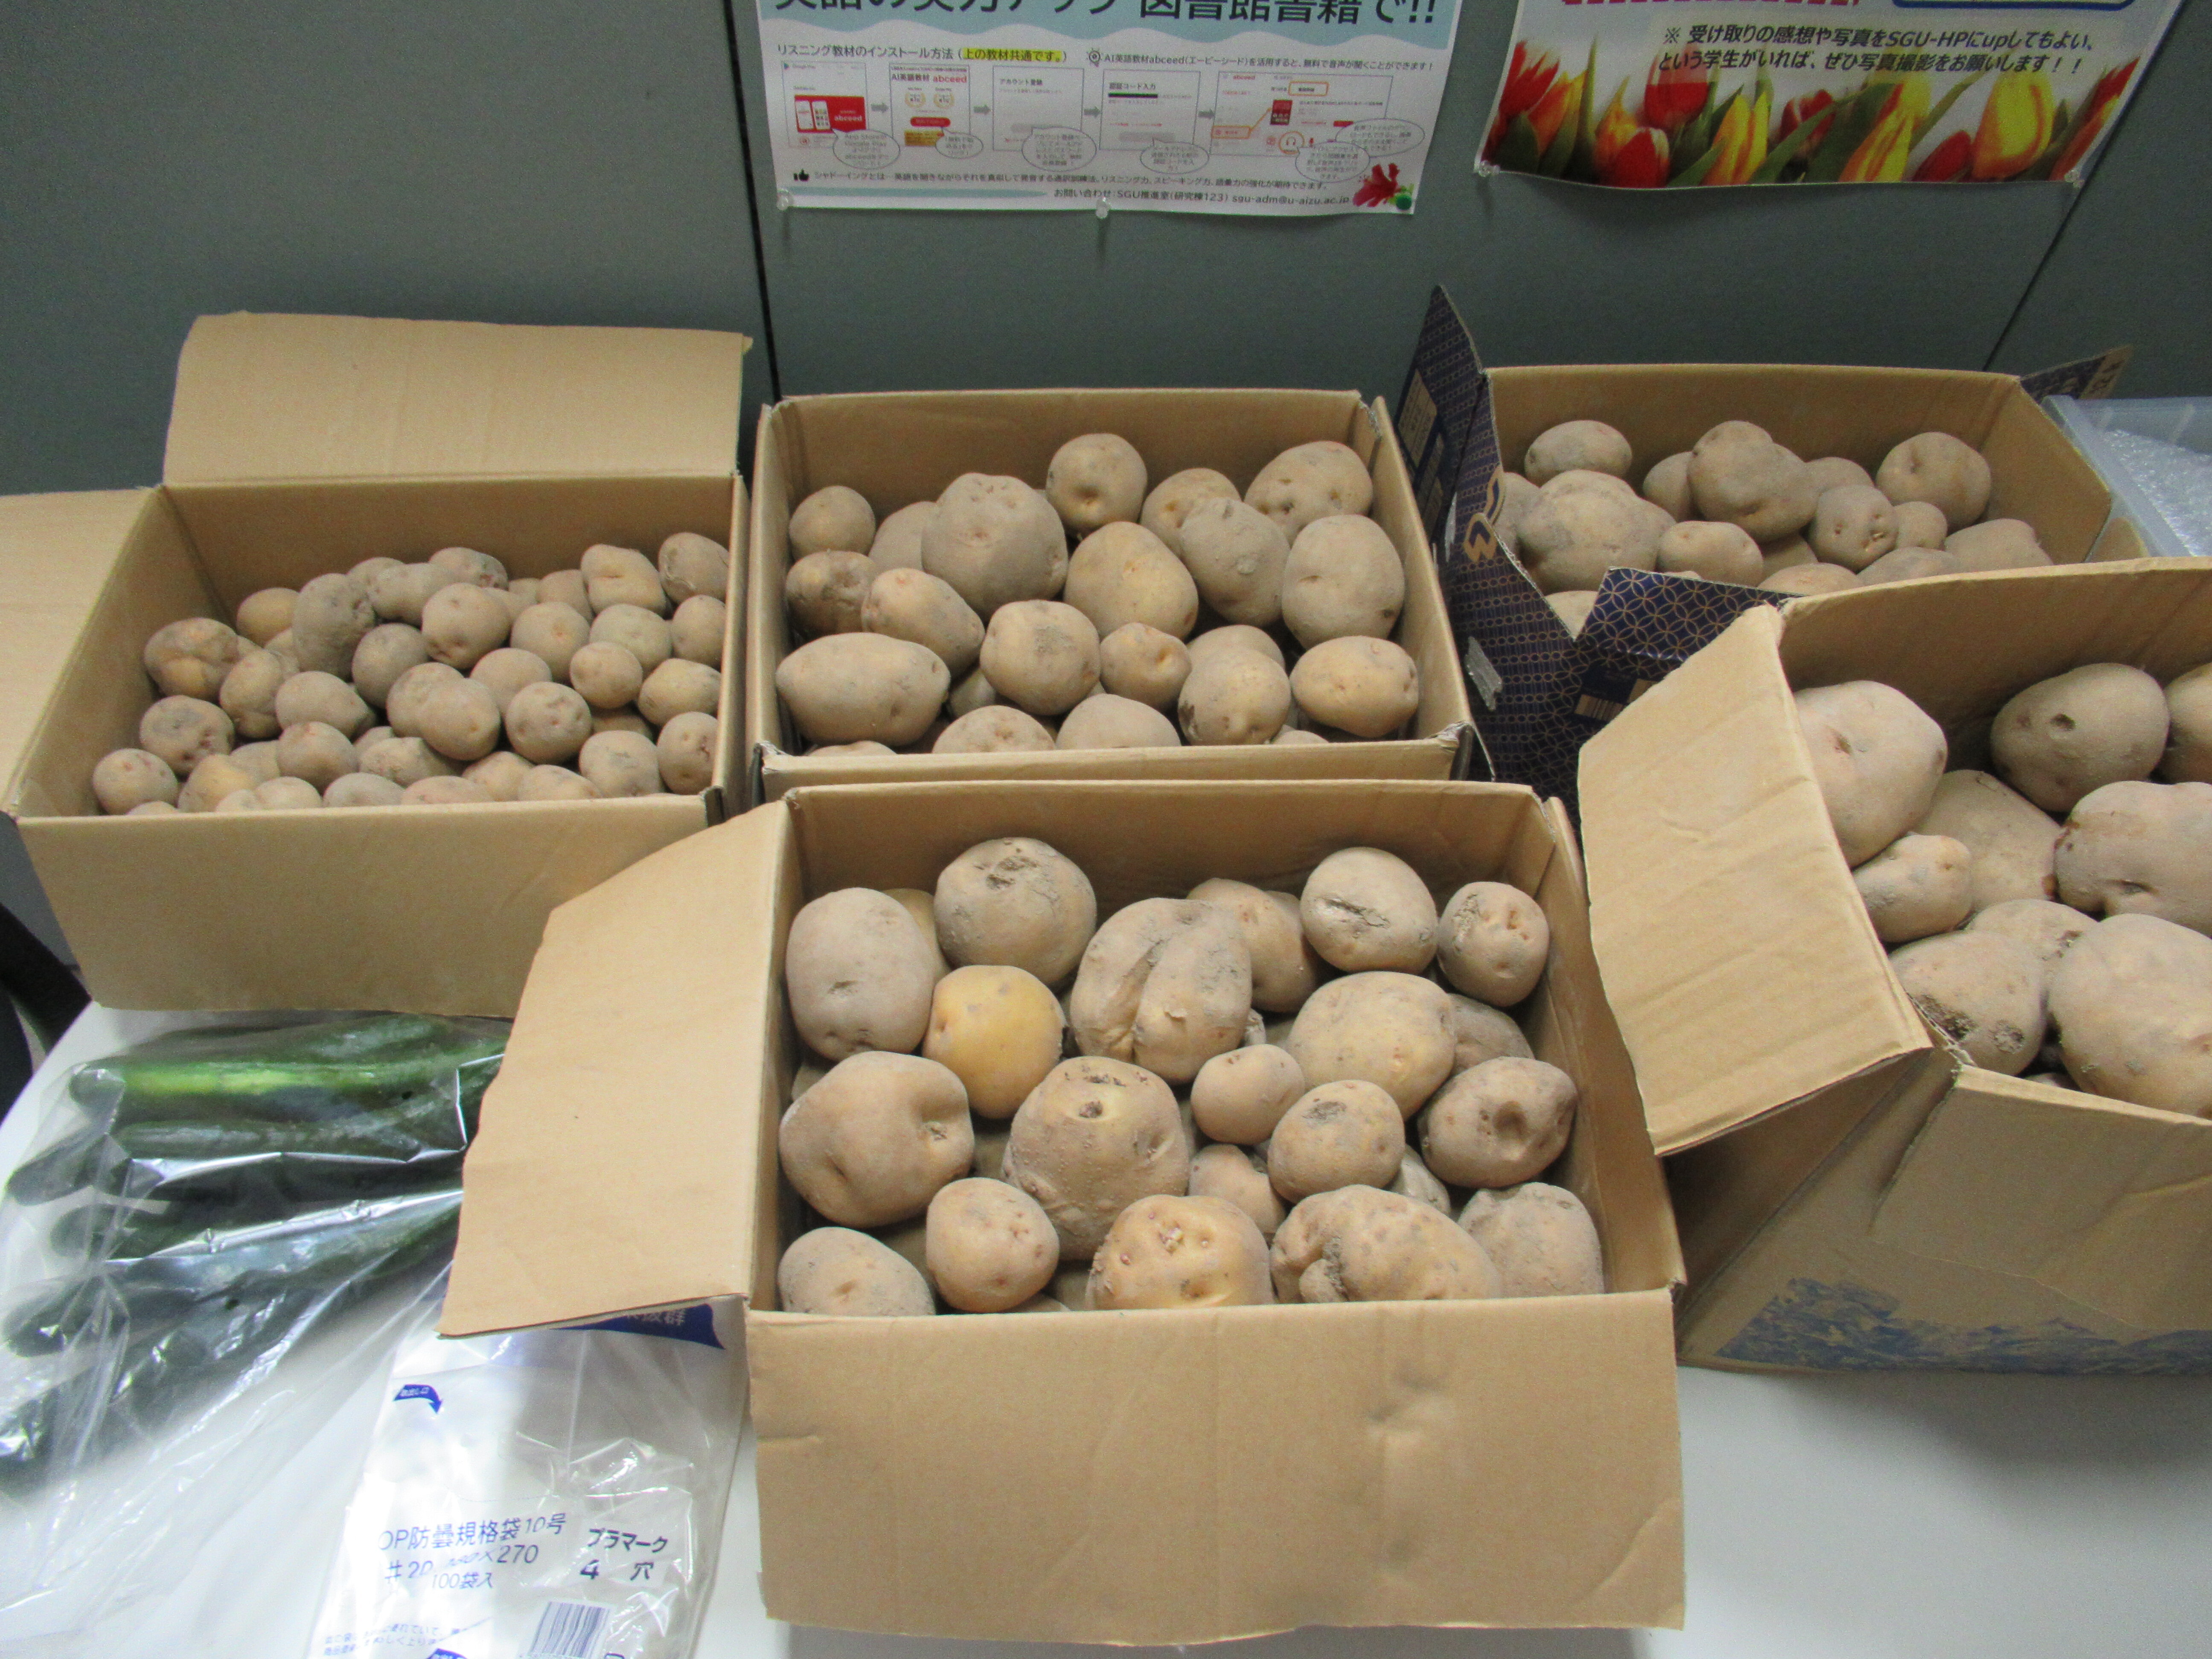 MS. Takahashi donated vegetable(Potato) to the international students